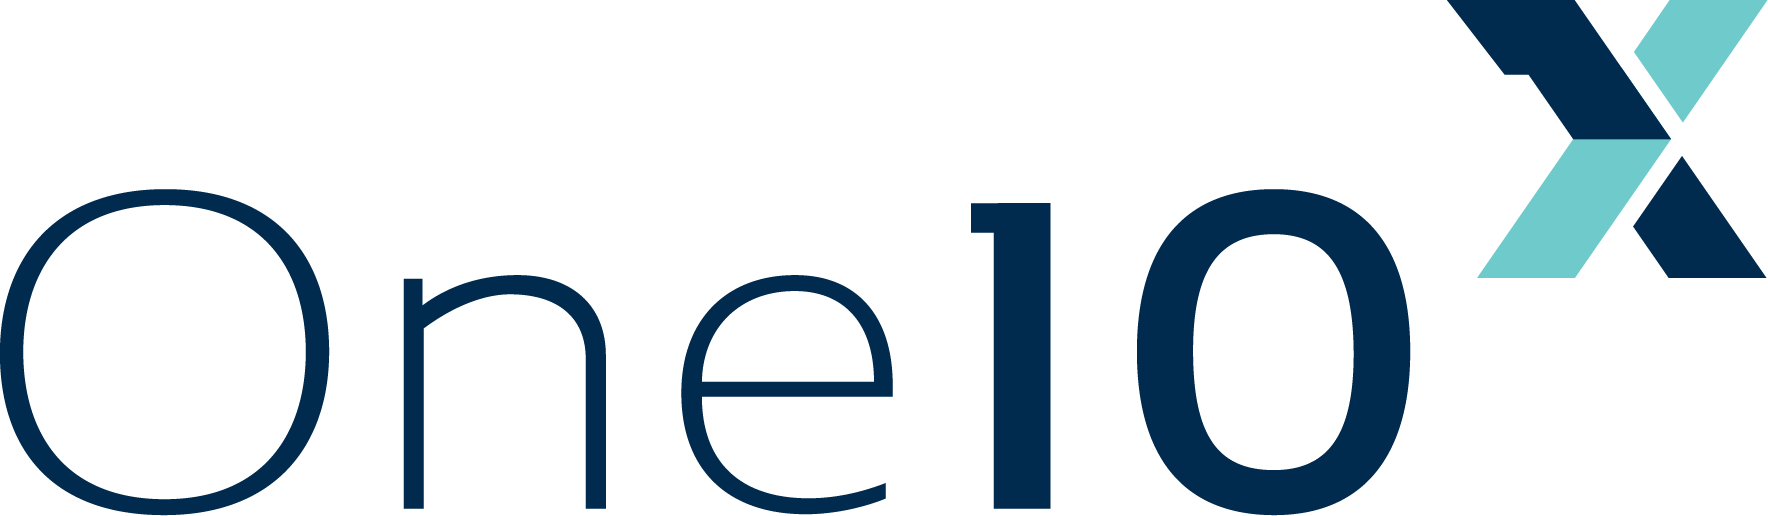 Logo Graphic Templates - Envato Elements